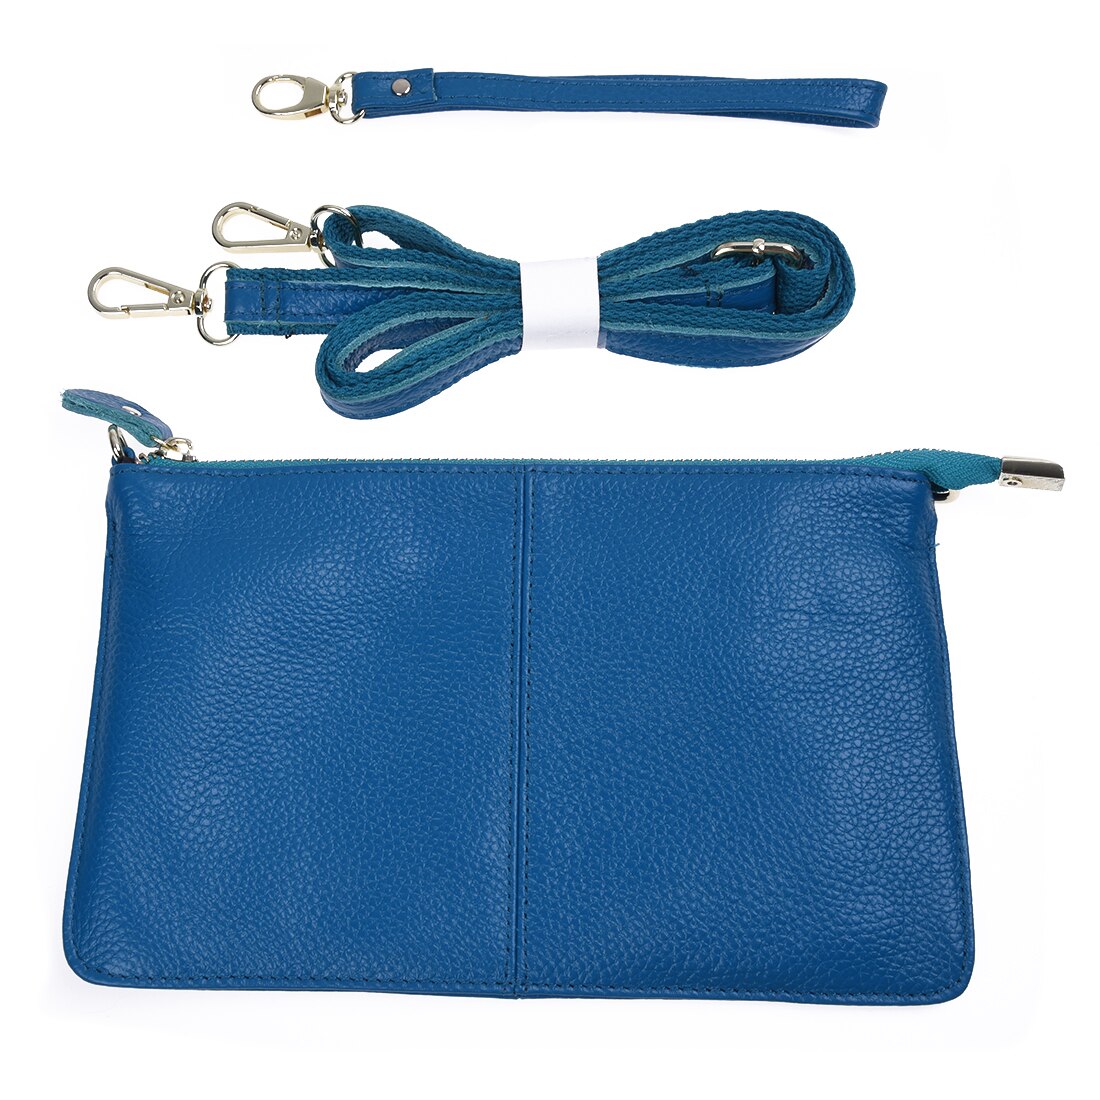 2016 New Fashion Leather Envelope Clutch Designer Handbags High Quality Crossbody Womens Female Clutch Evening Bags - ebowsos